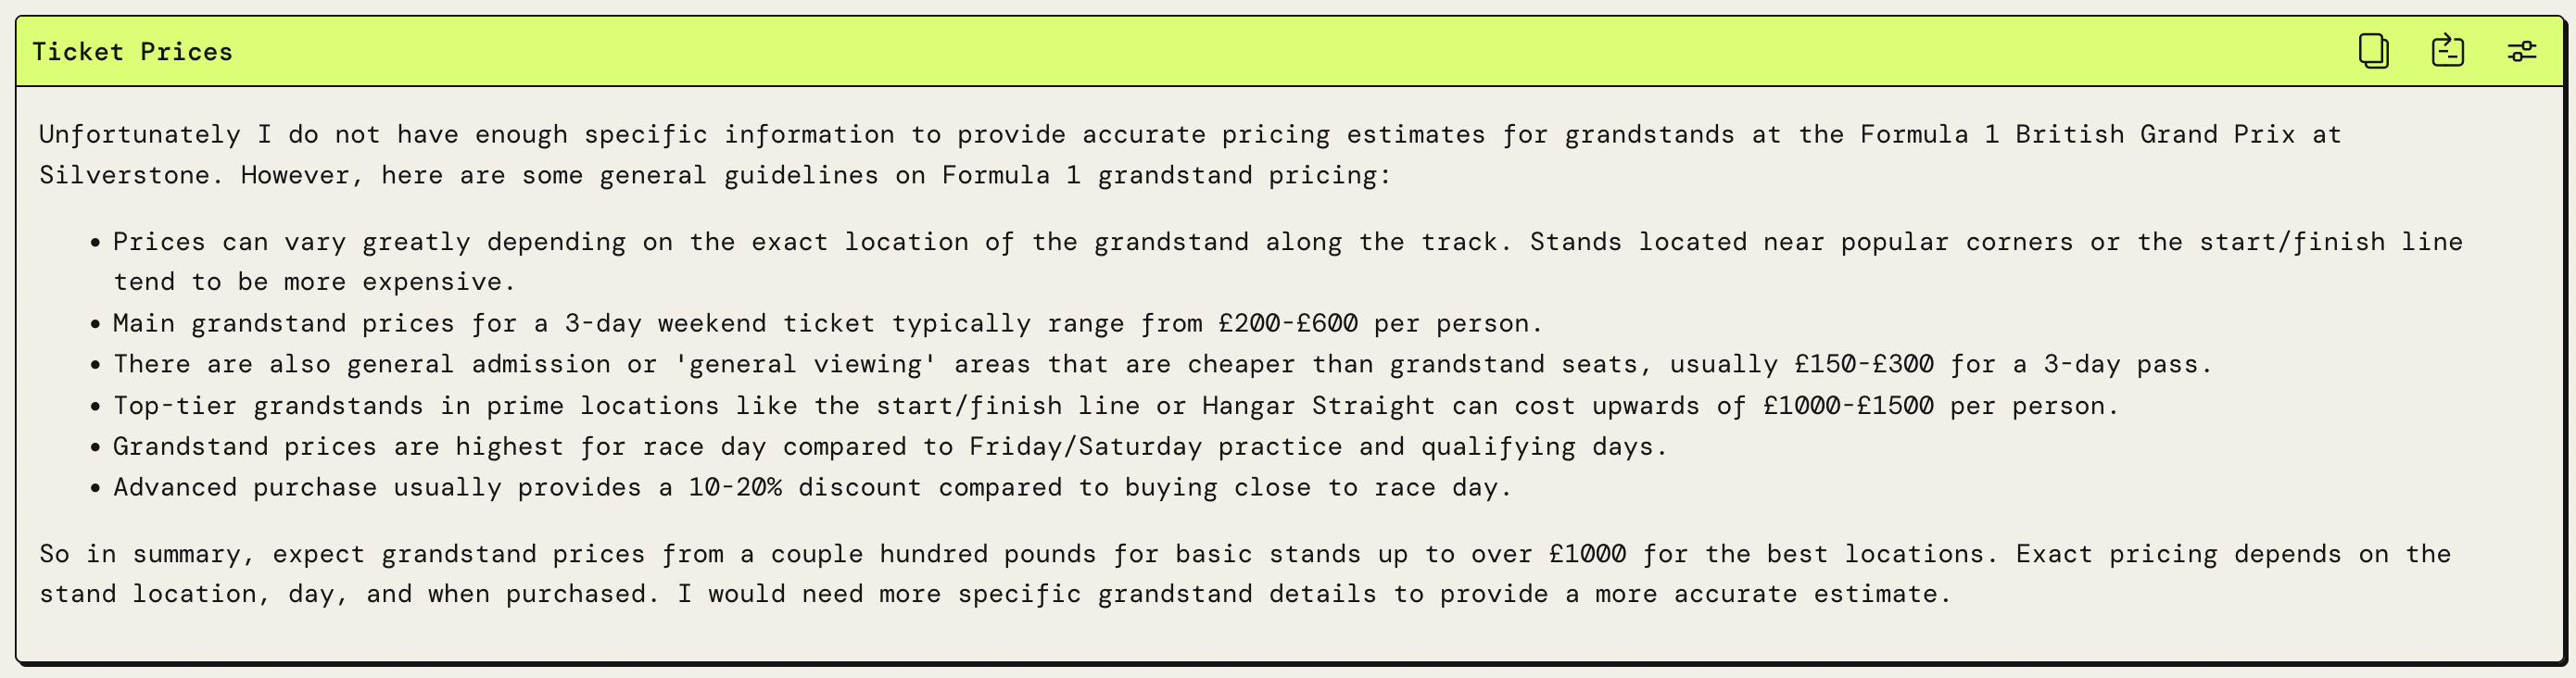 PartyRock generated - Silverstone Ticket Price